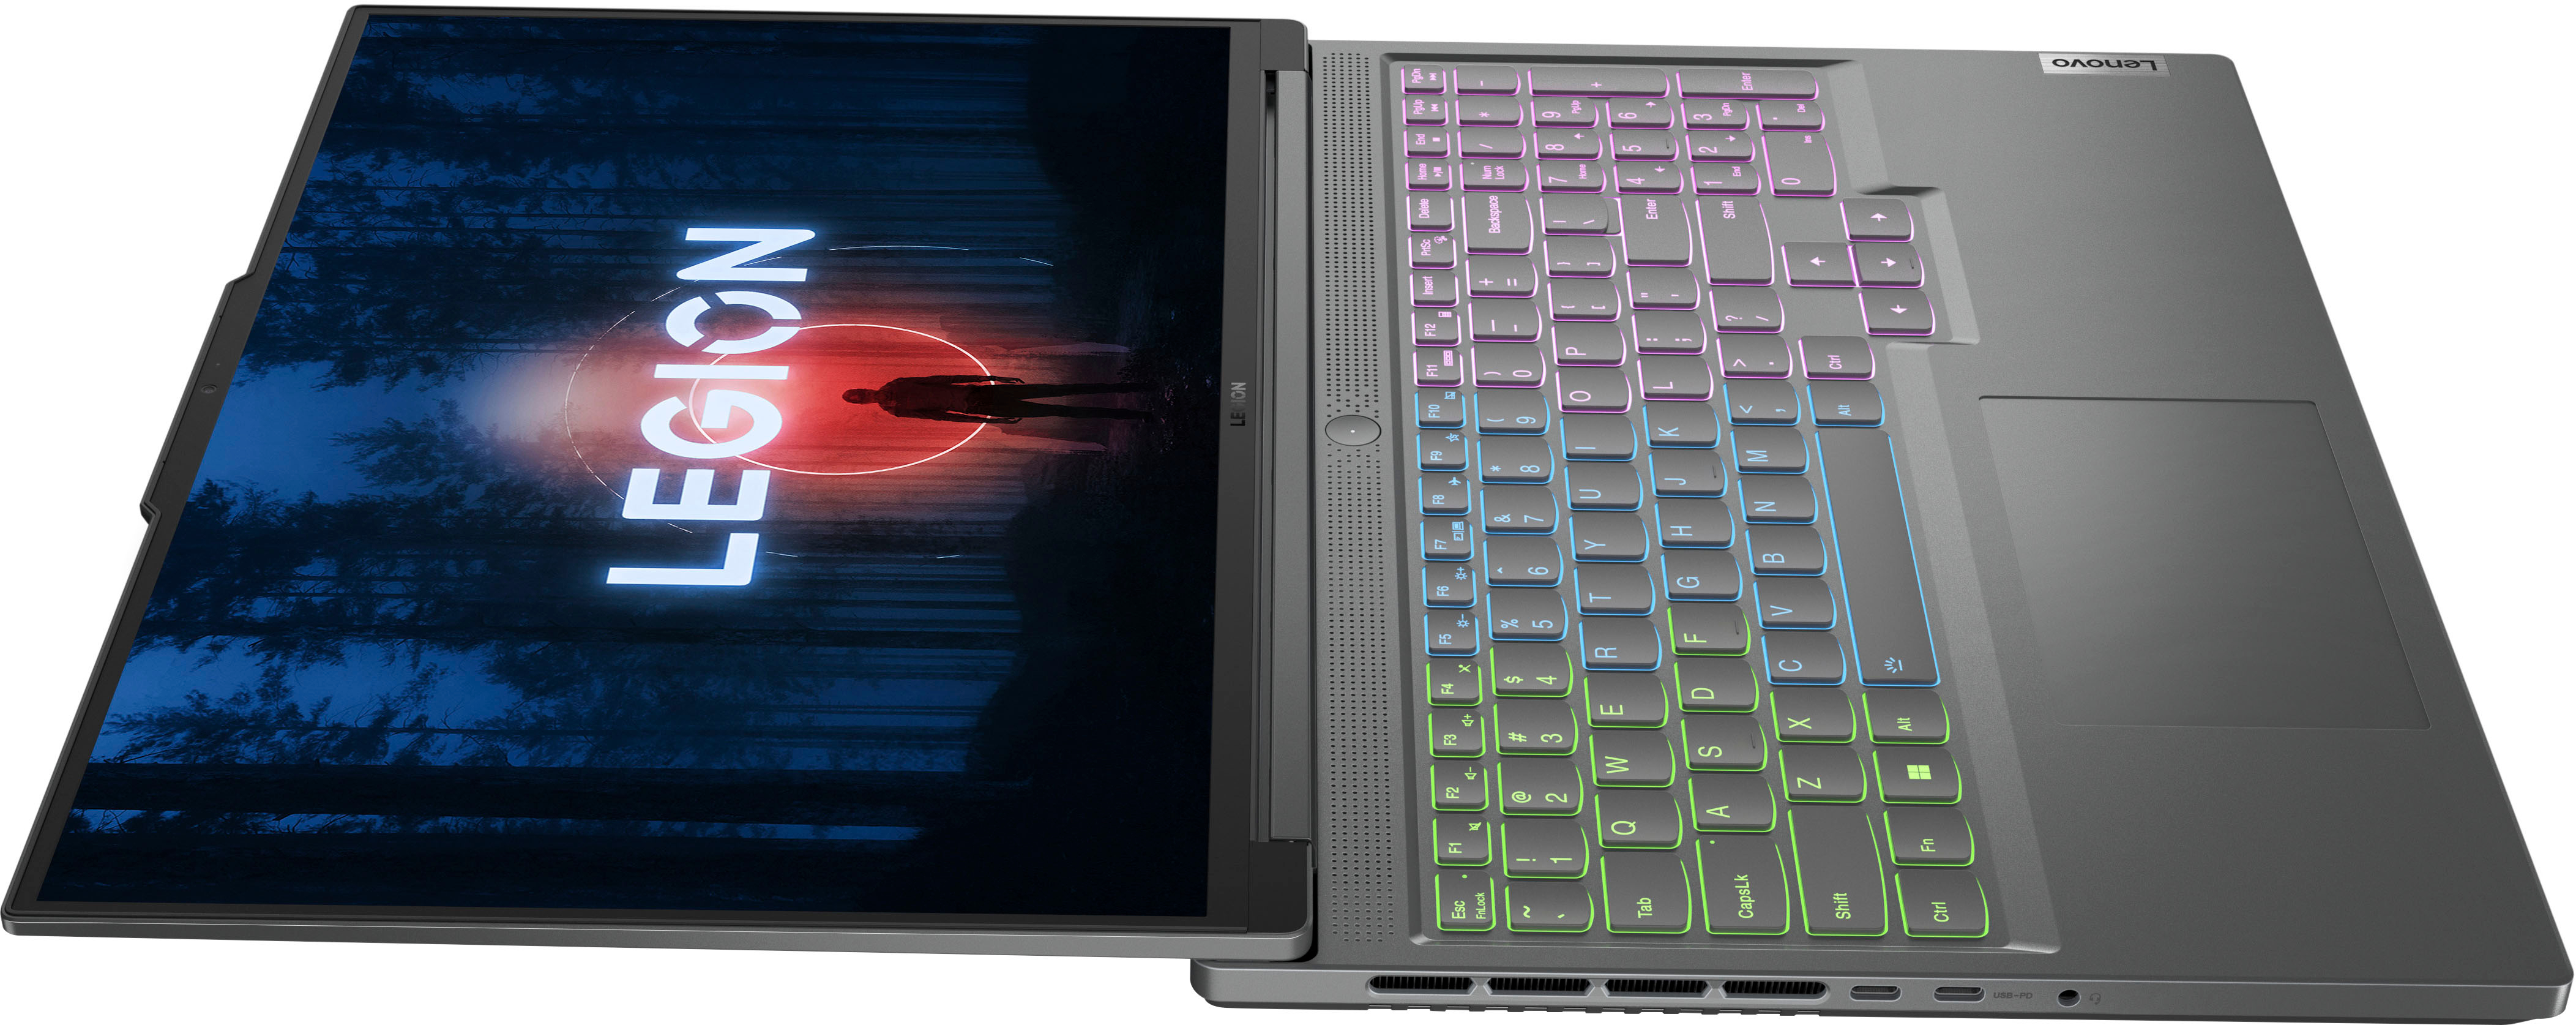 Lenovo Legion Slim 5 16 Gaming Laptop WQXGA Ryzen 7 7840HS with 16GB  Memory NVIDIA GeForce RTX 4060 8GB 512GB SSD Storm Grey 82Y9000PUS - Best  Buy